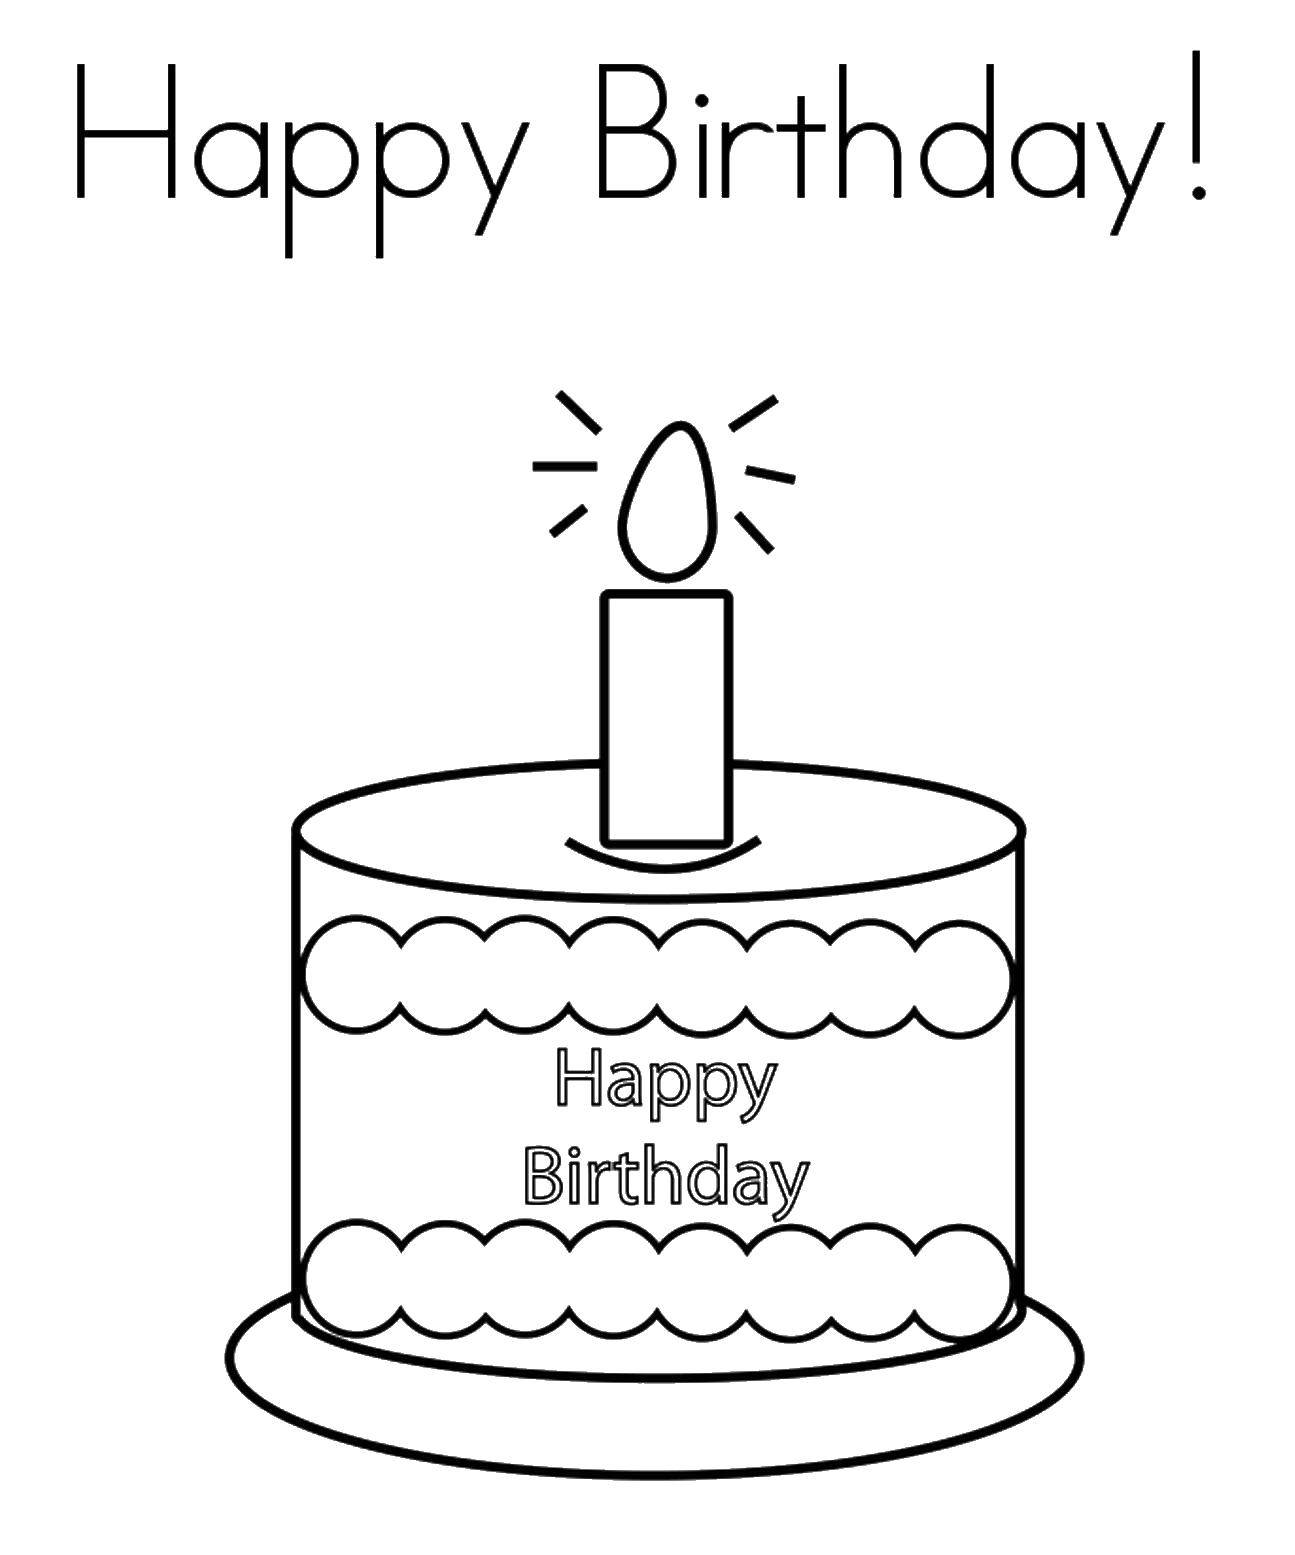 Название: Раскраска С днём рождения, свечка в торте. Категория: торты. Теги: Торт, еда, праздник.